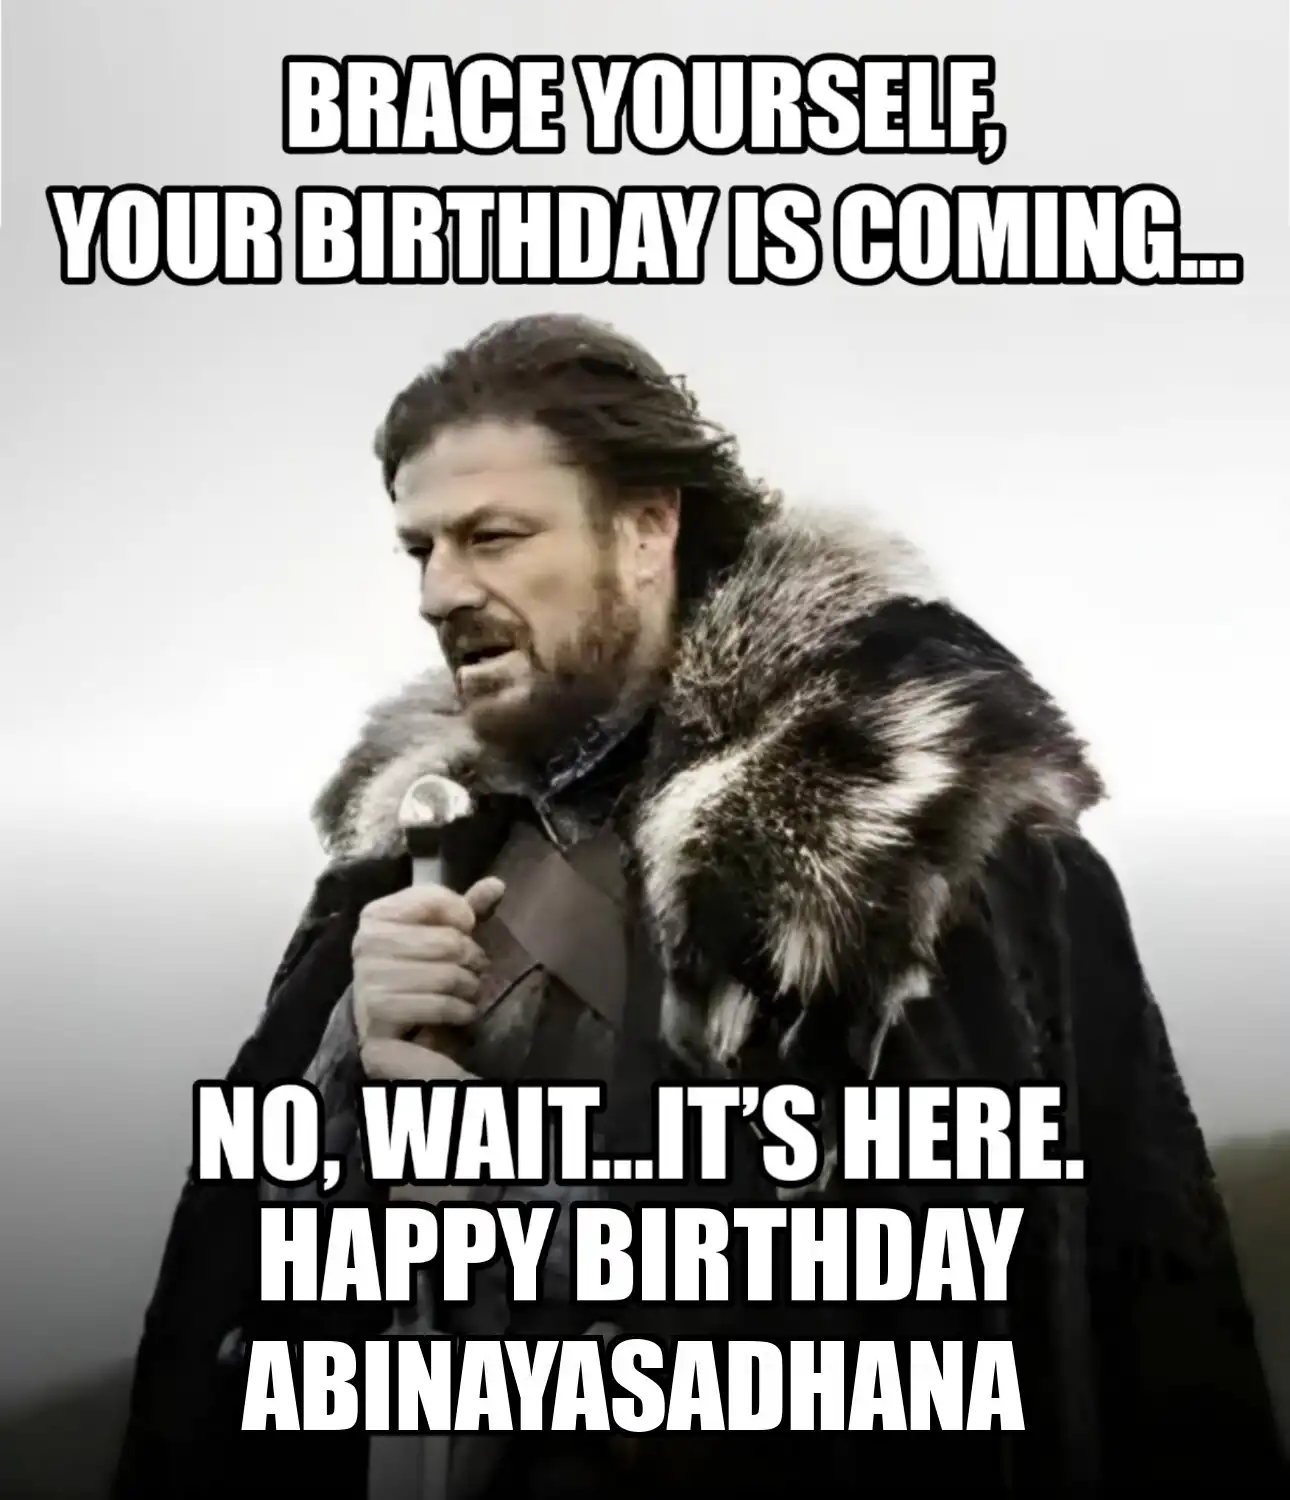 Happy Birthday Abinayasadhana Brace Yourself Your Birthday Is Coming Meme